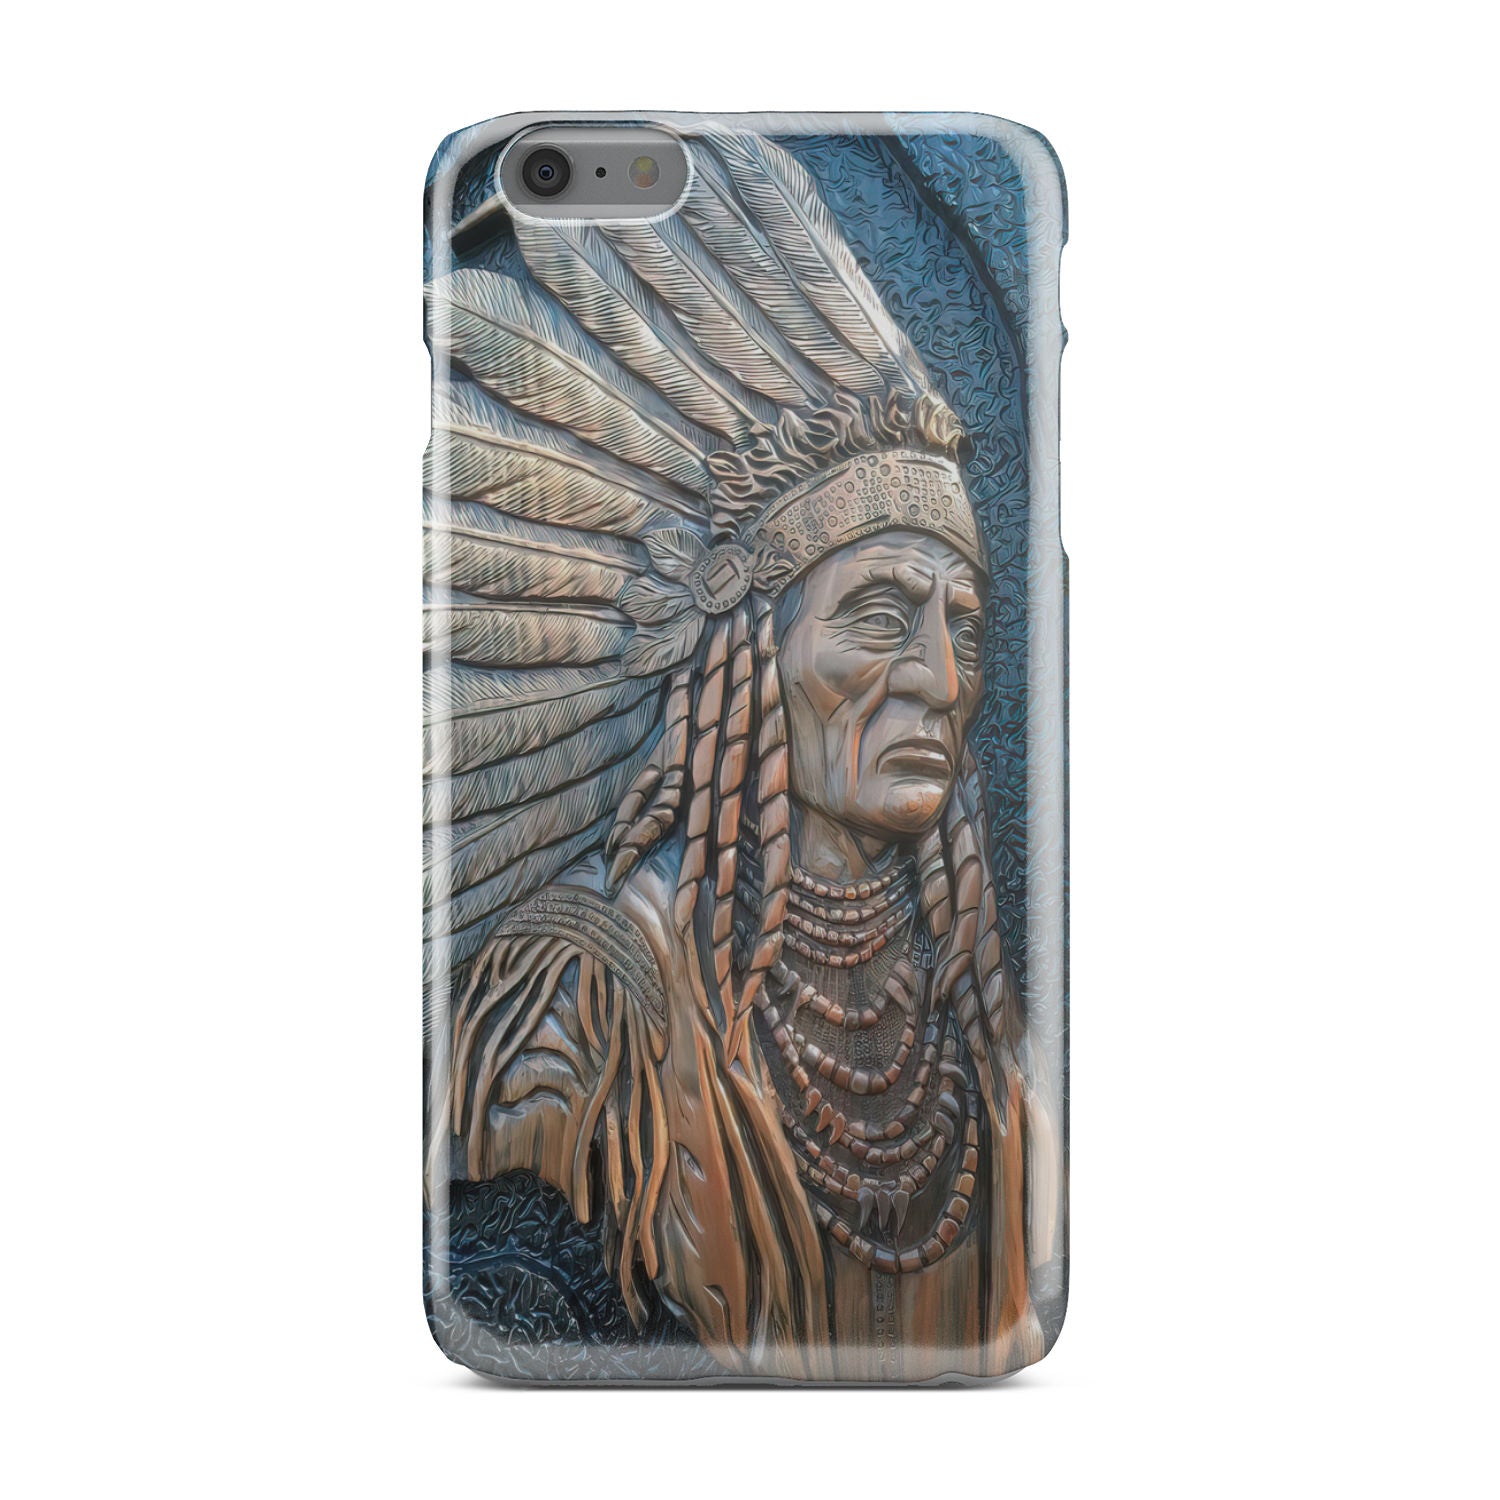 Powwow Storepcs002 native american symbol phone case new